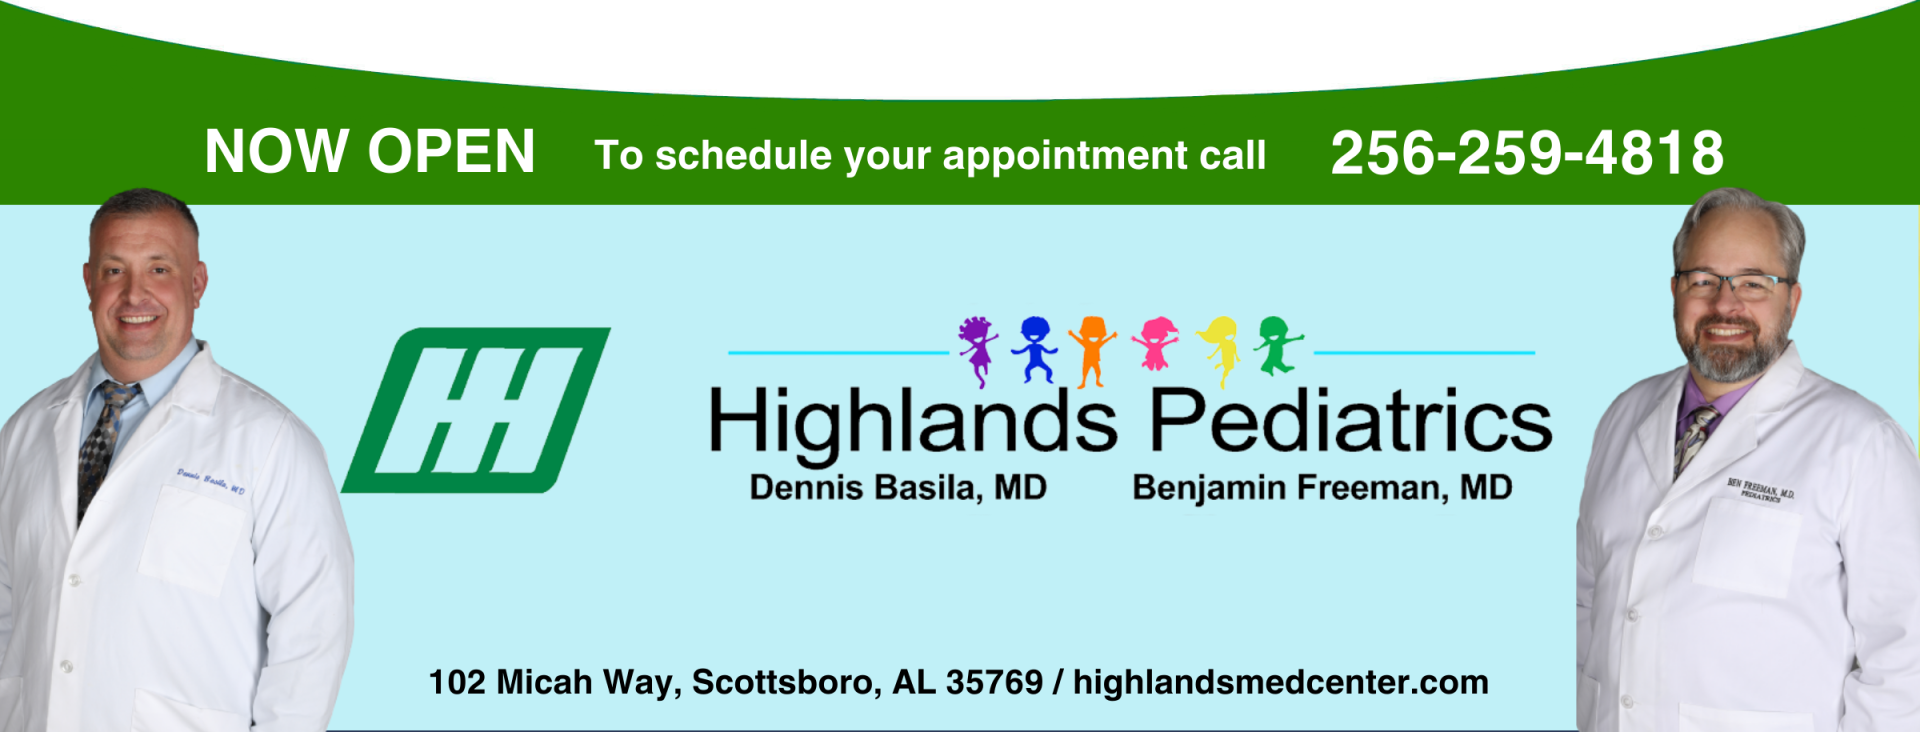 Highlands Pediatrics Website Banner